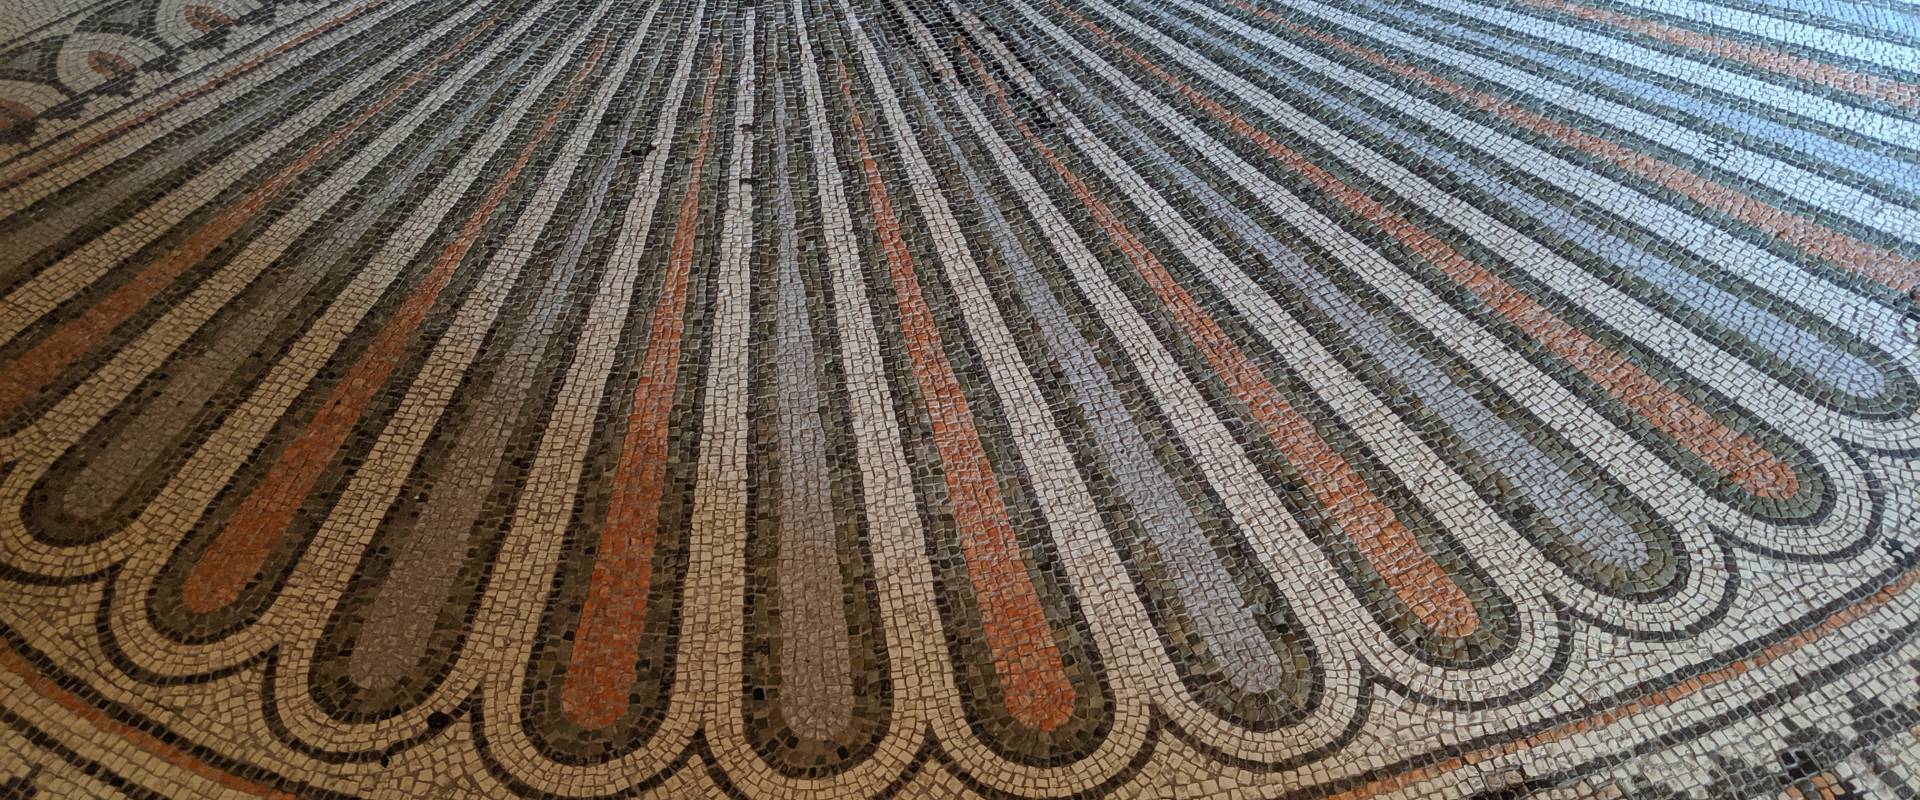 San Vitale Shell-Like Floor Mosaic foto di Conor Manley